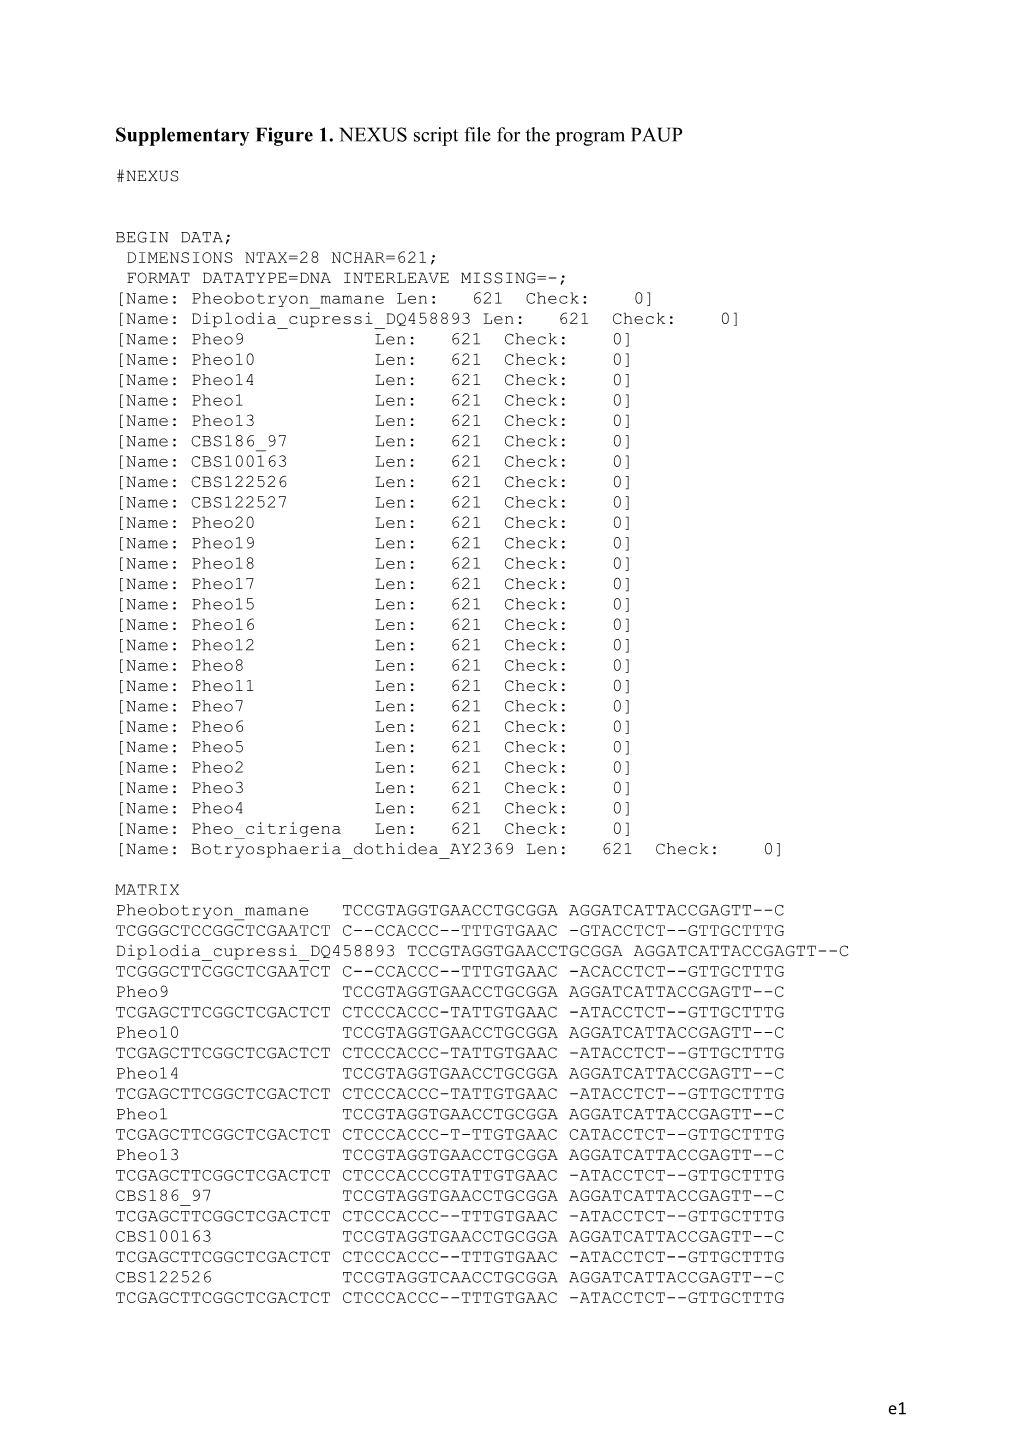 Supplementary Figure 1. NEXUS Script File for the Program PAUP